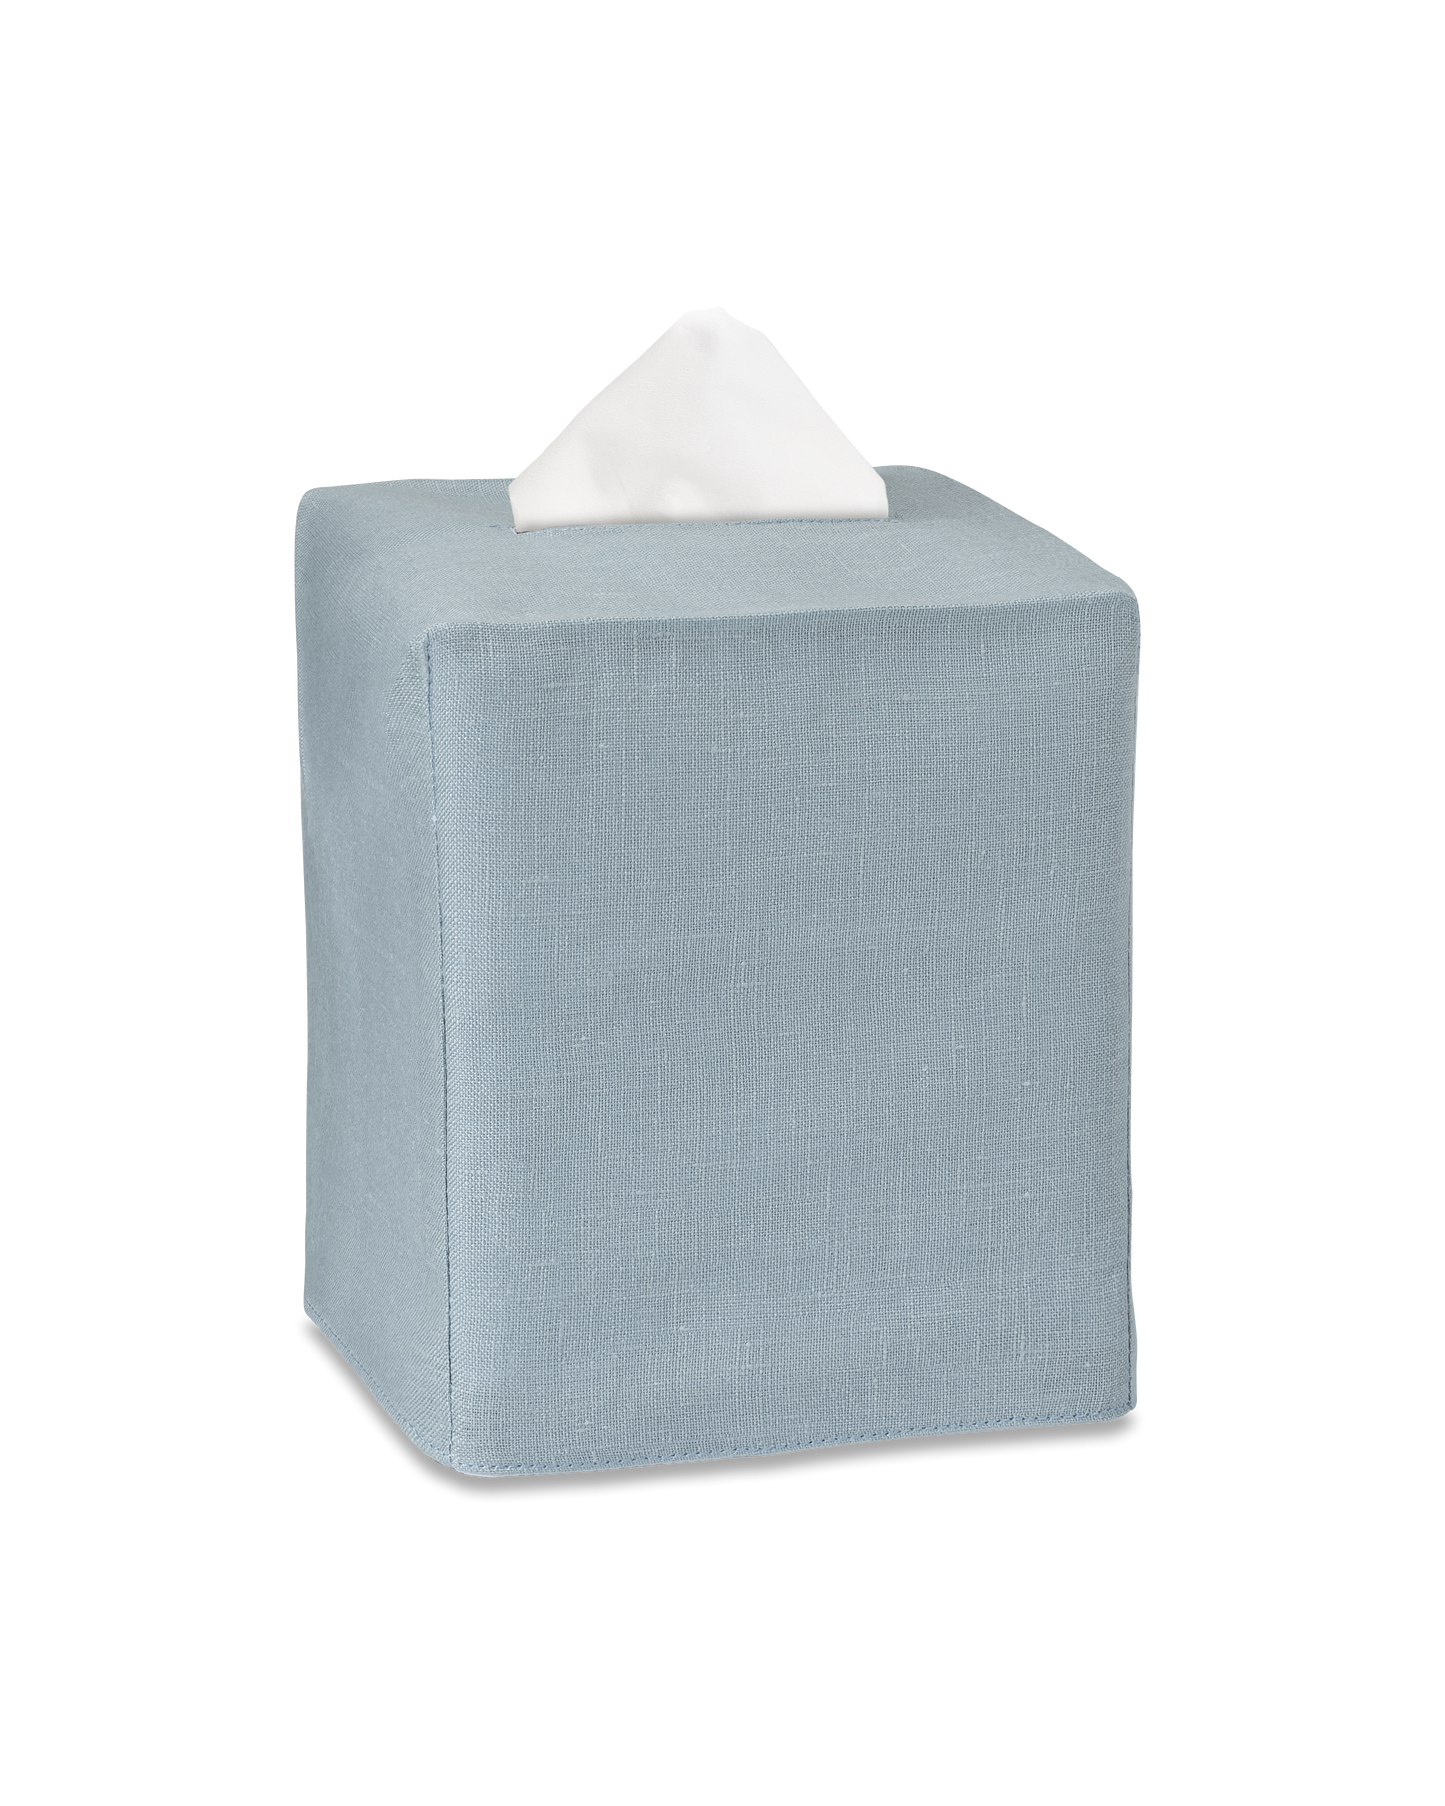 A sky blue linen tissue box cover